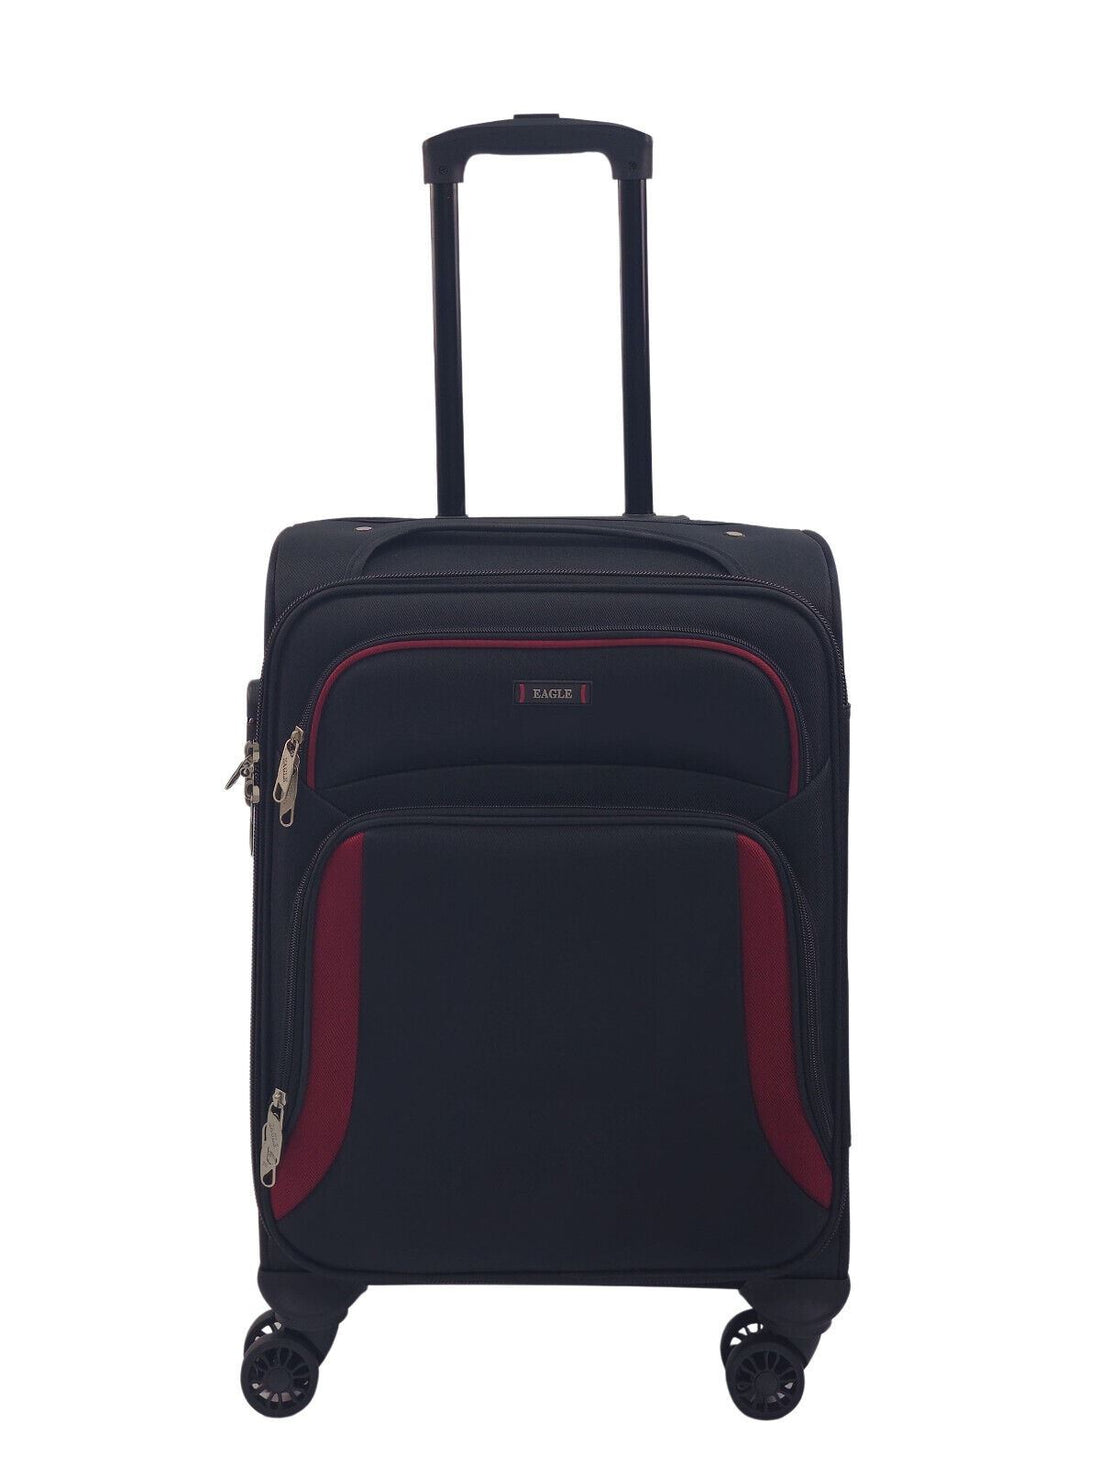 Ashland Cabin Soft Shell Suitcase in Black